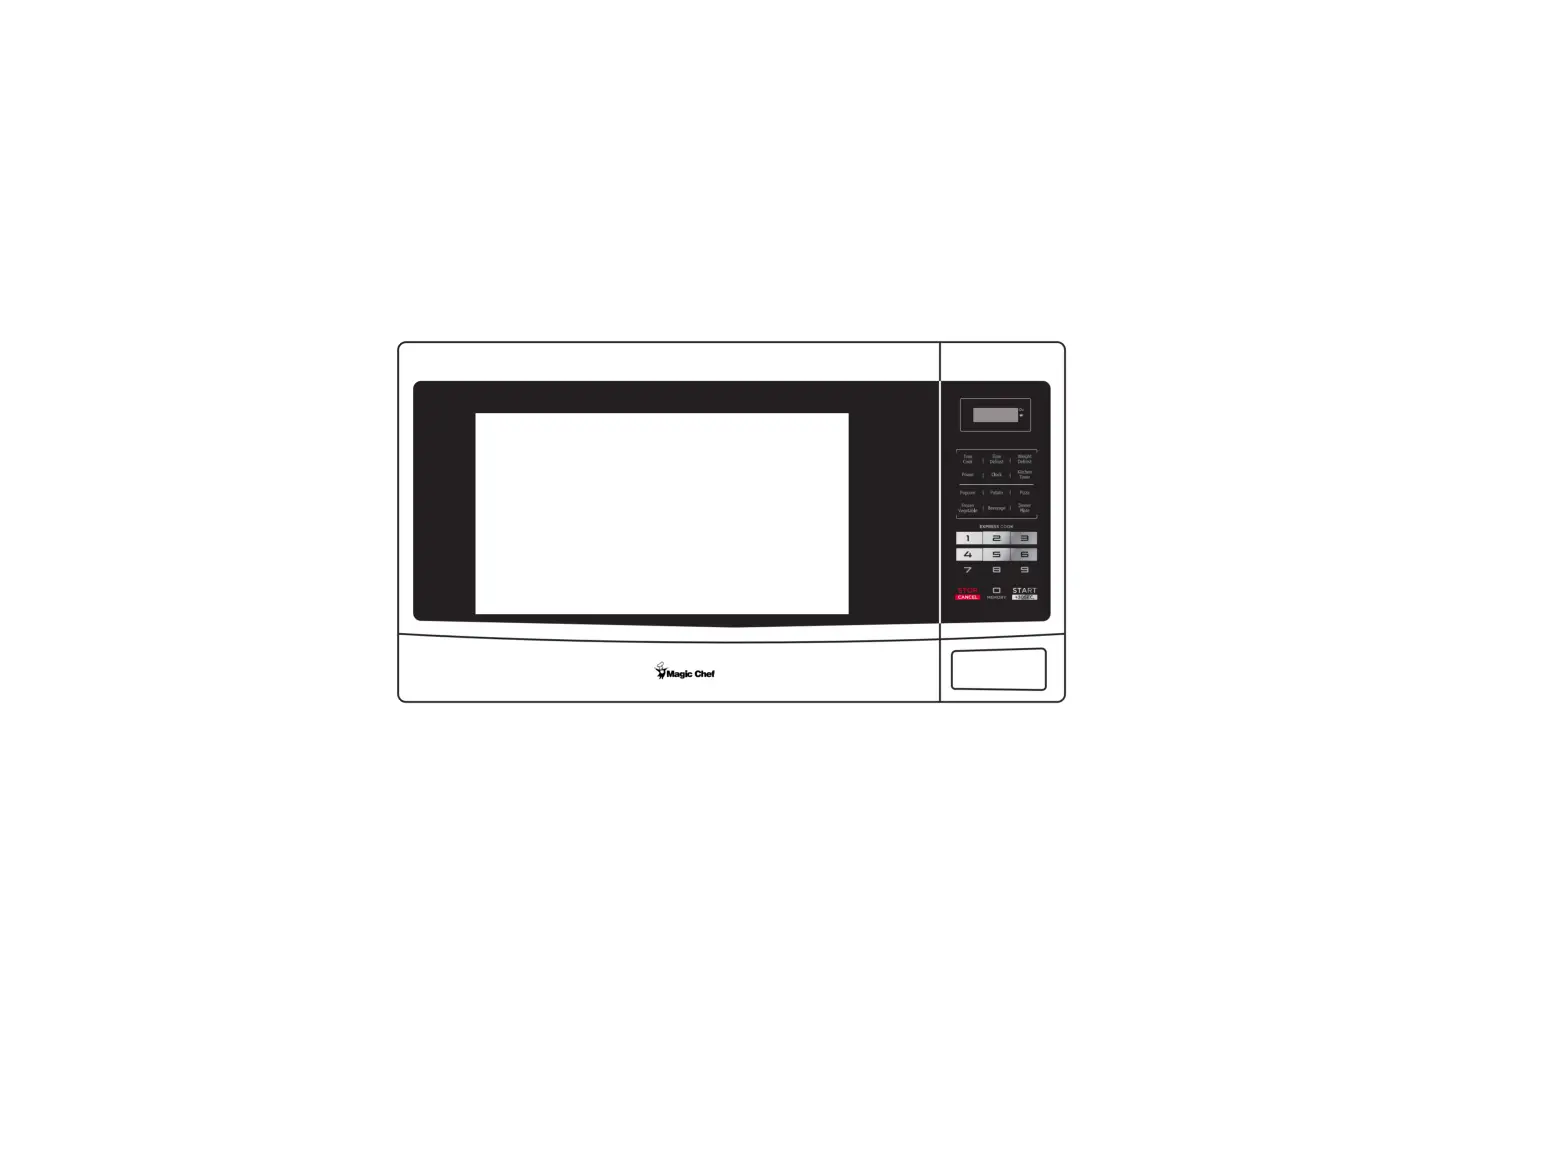 Magic Chef Countertop Microwave Oven User Manual